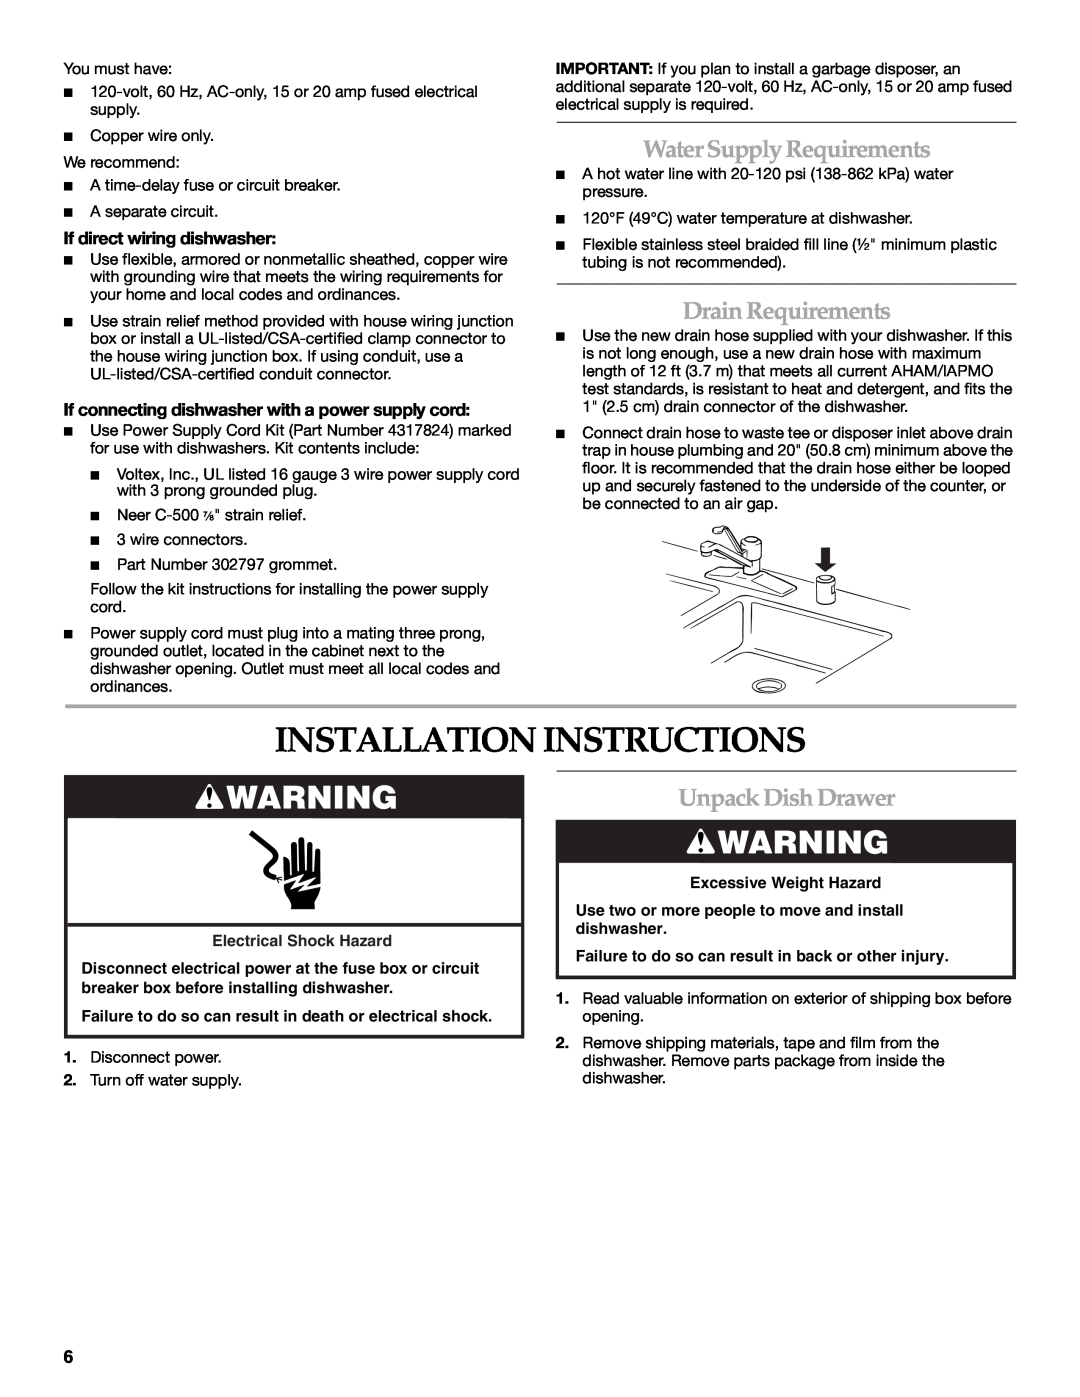 KitchenAid KUDD03STBL Installation Instructions, Water Supply Requirements, Drain Requirements, Unpack Dish Drawer 